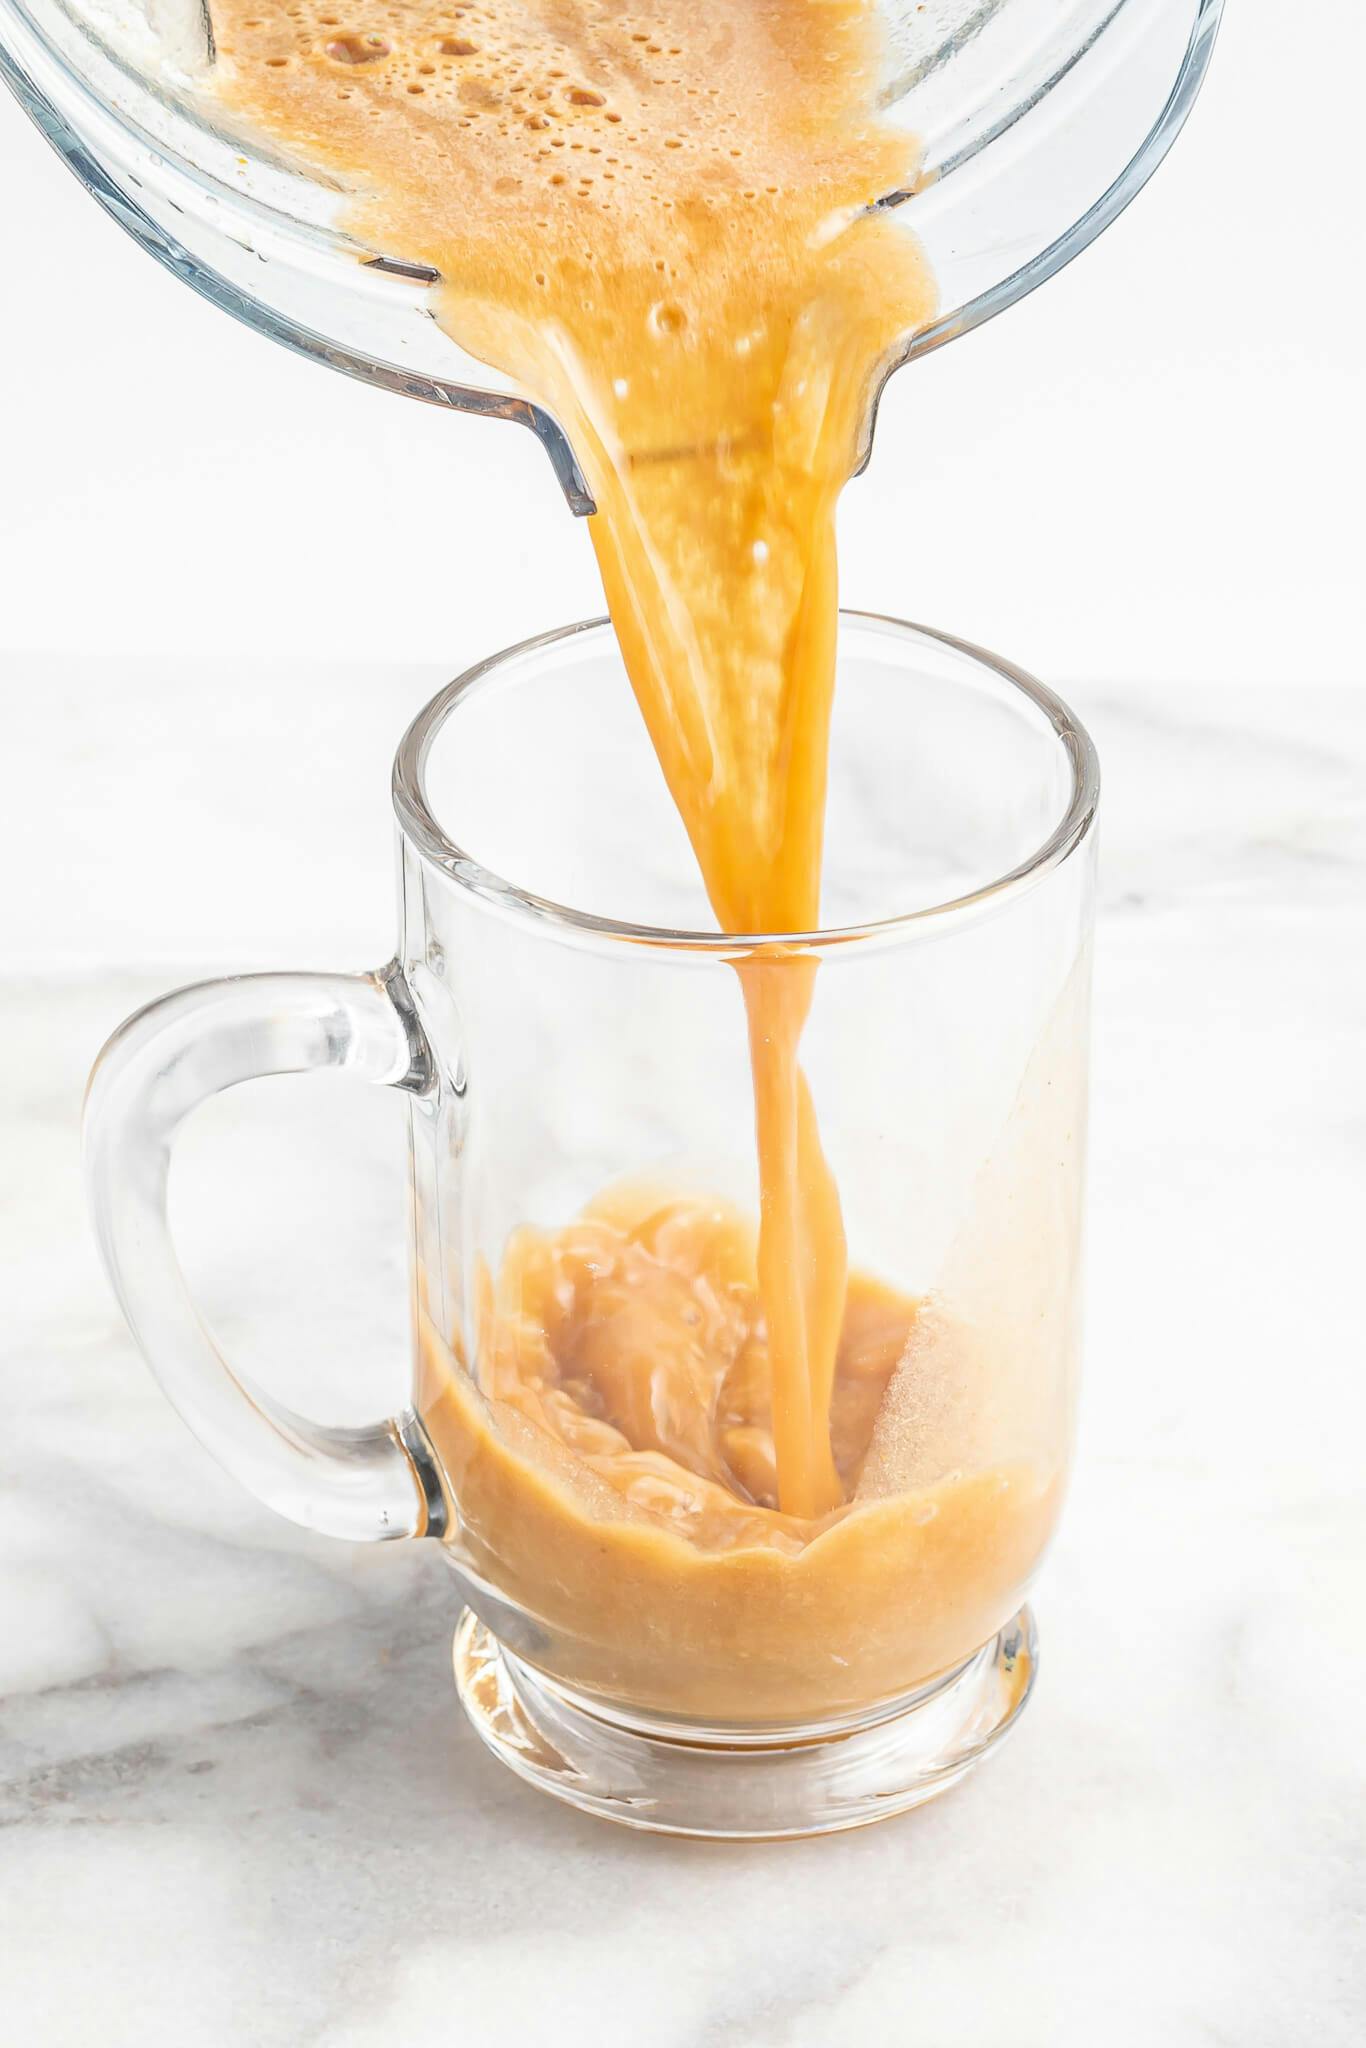 filling a glass mug with a homemade pumpkin spice latte